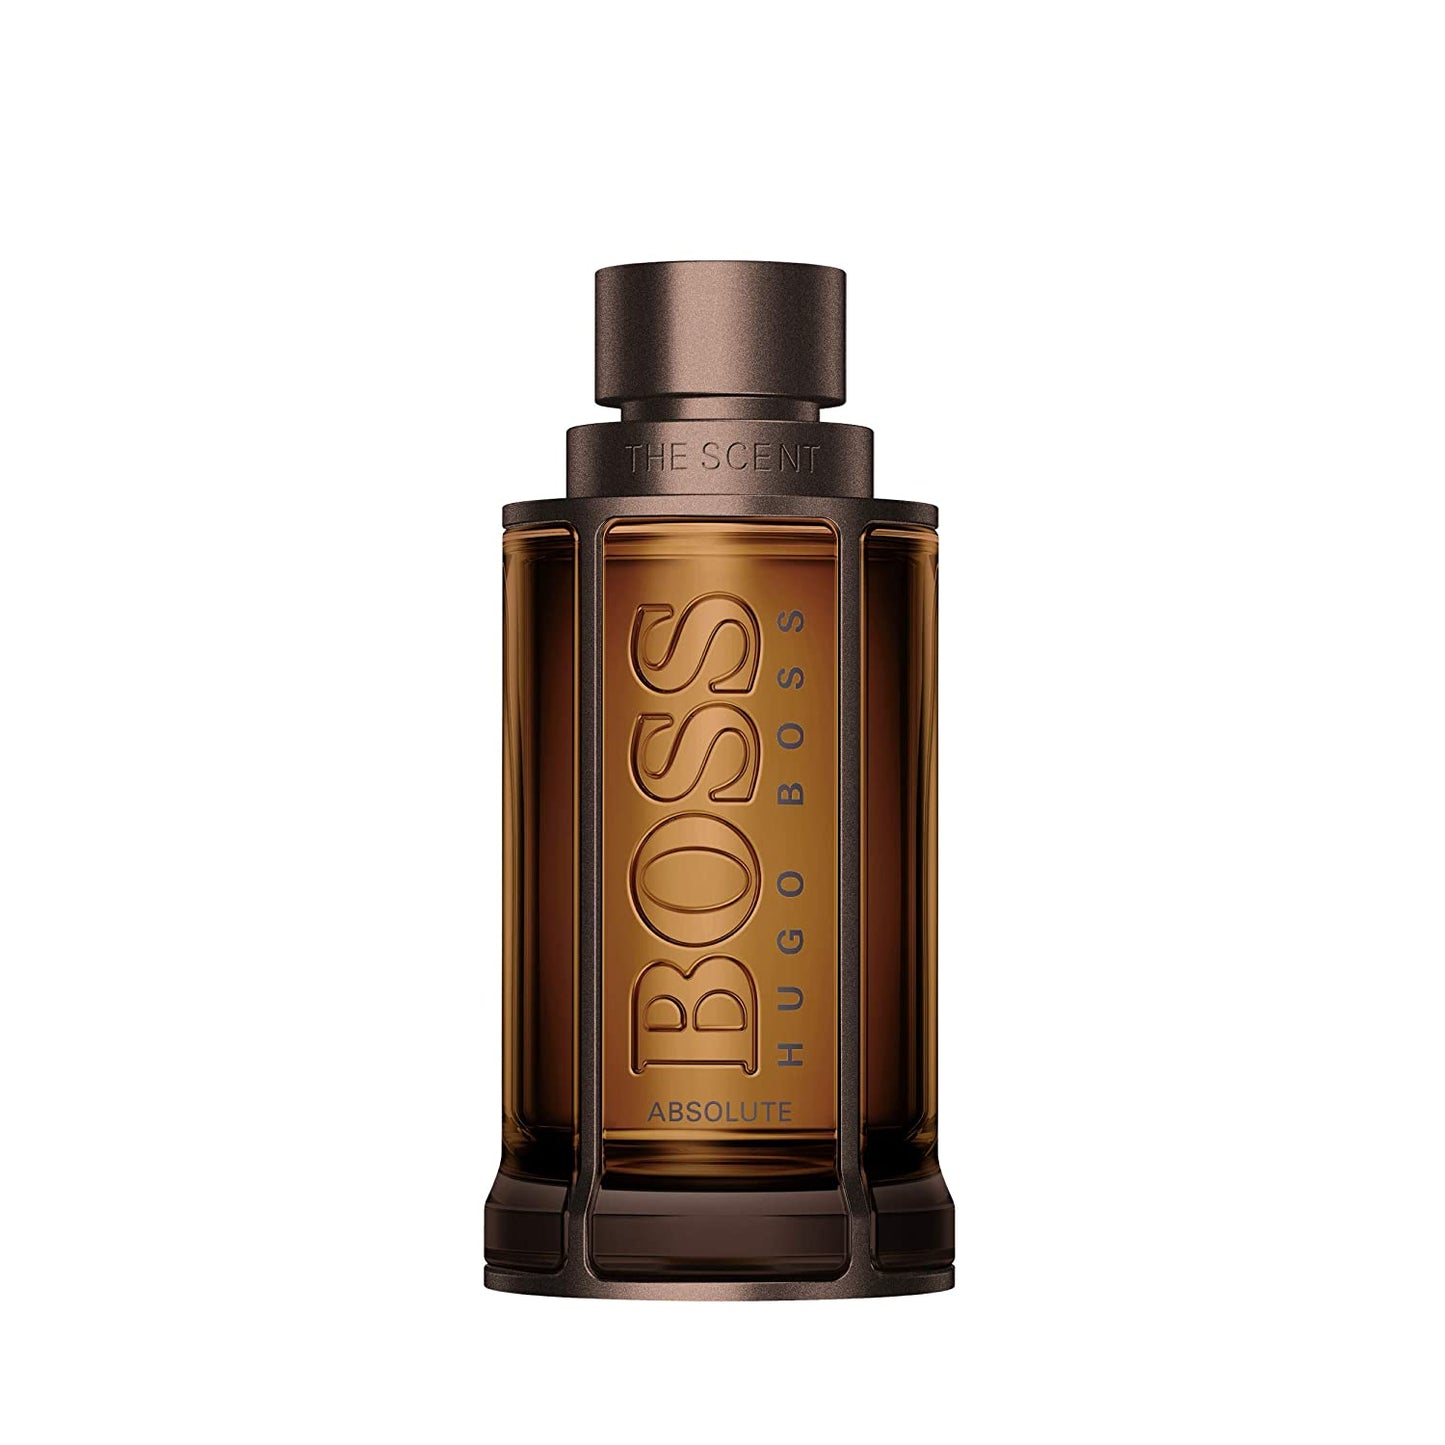 Hugo Boss The Scent Absolute Eau De Parfum 50ml for Him